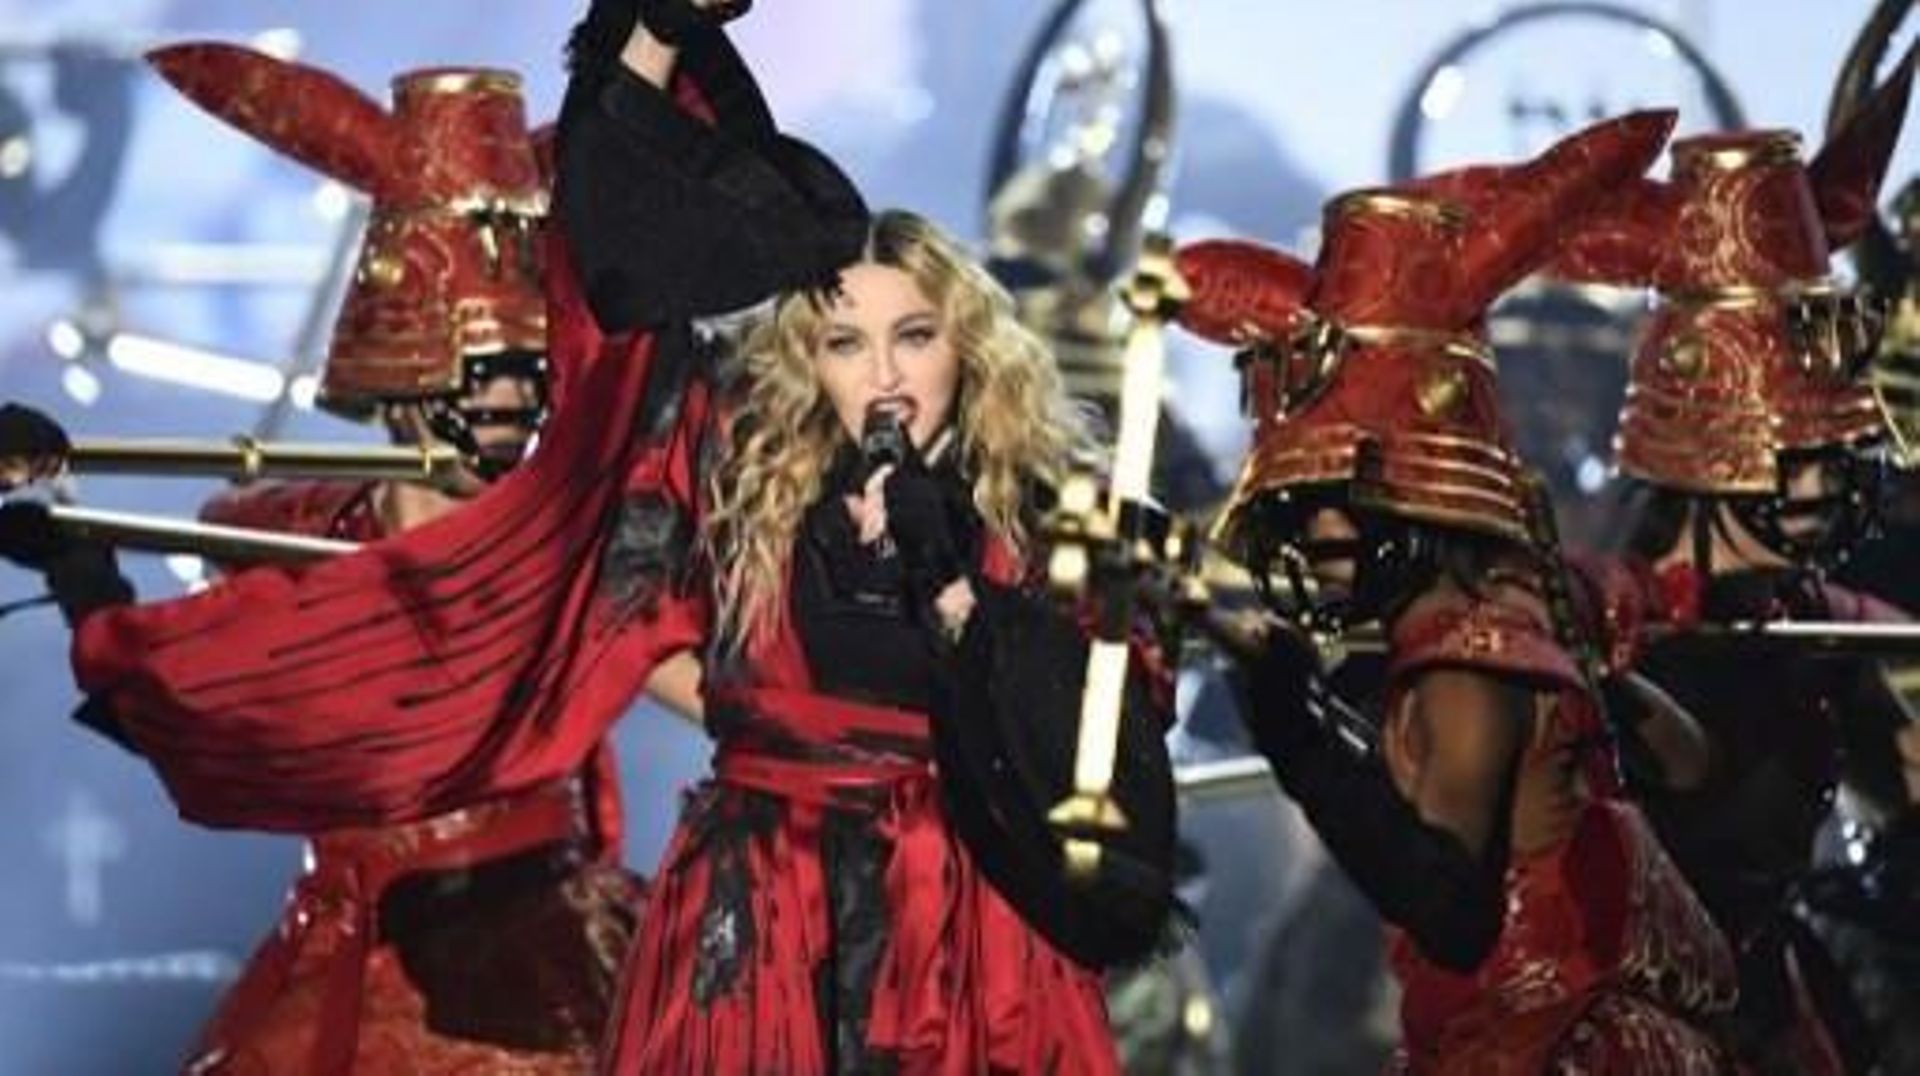 US singer Madonna performs on stage during her Rebel Heart tour in Berlin, on November 10, 2015. AFP PHOTO / TOBIAS SCHWARZ